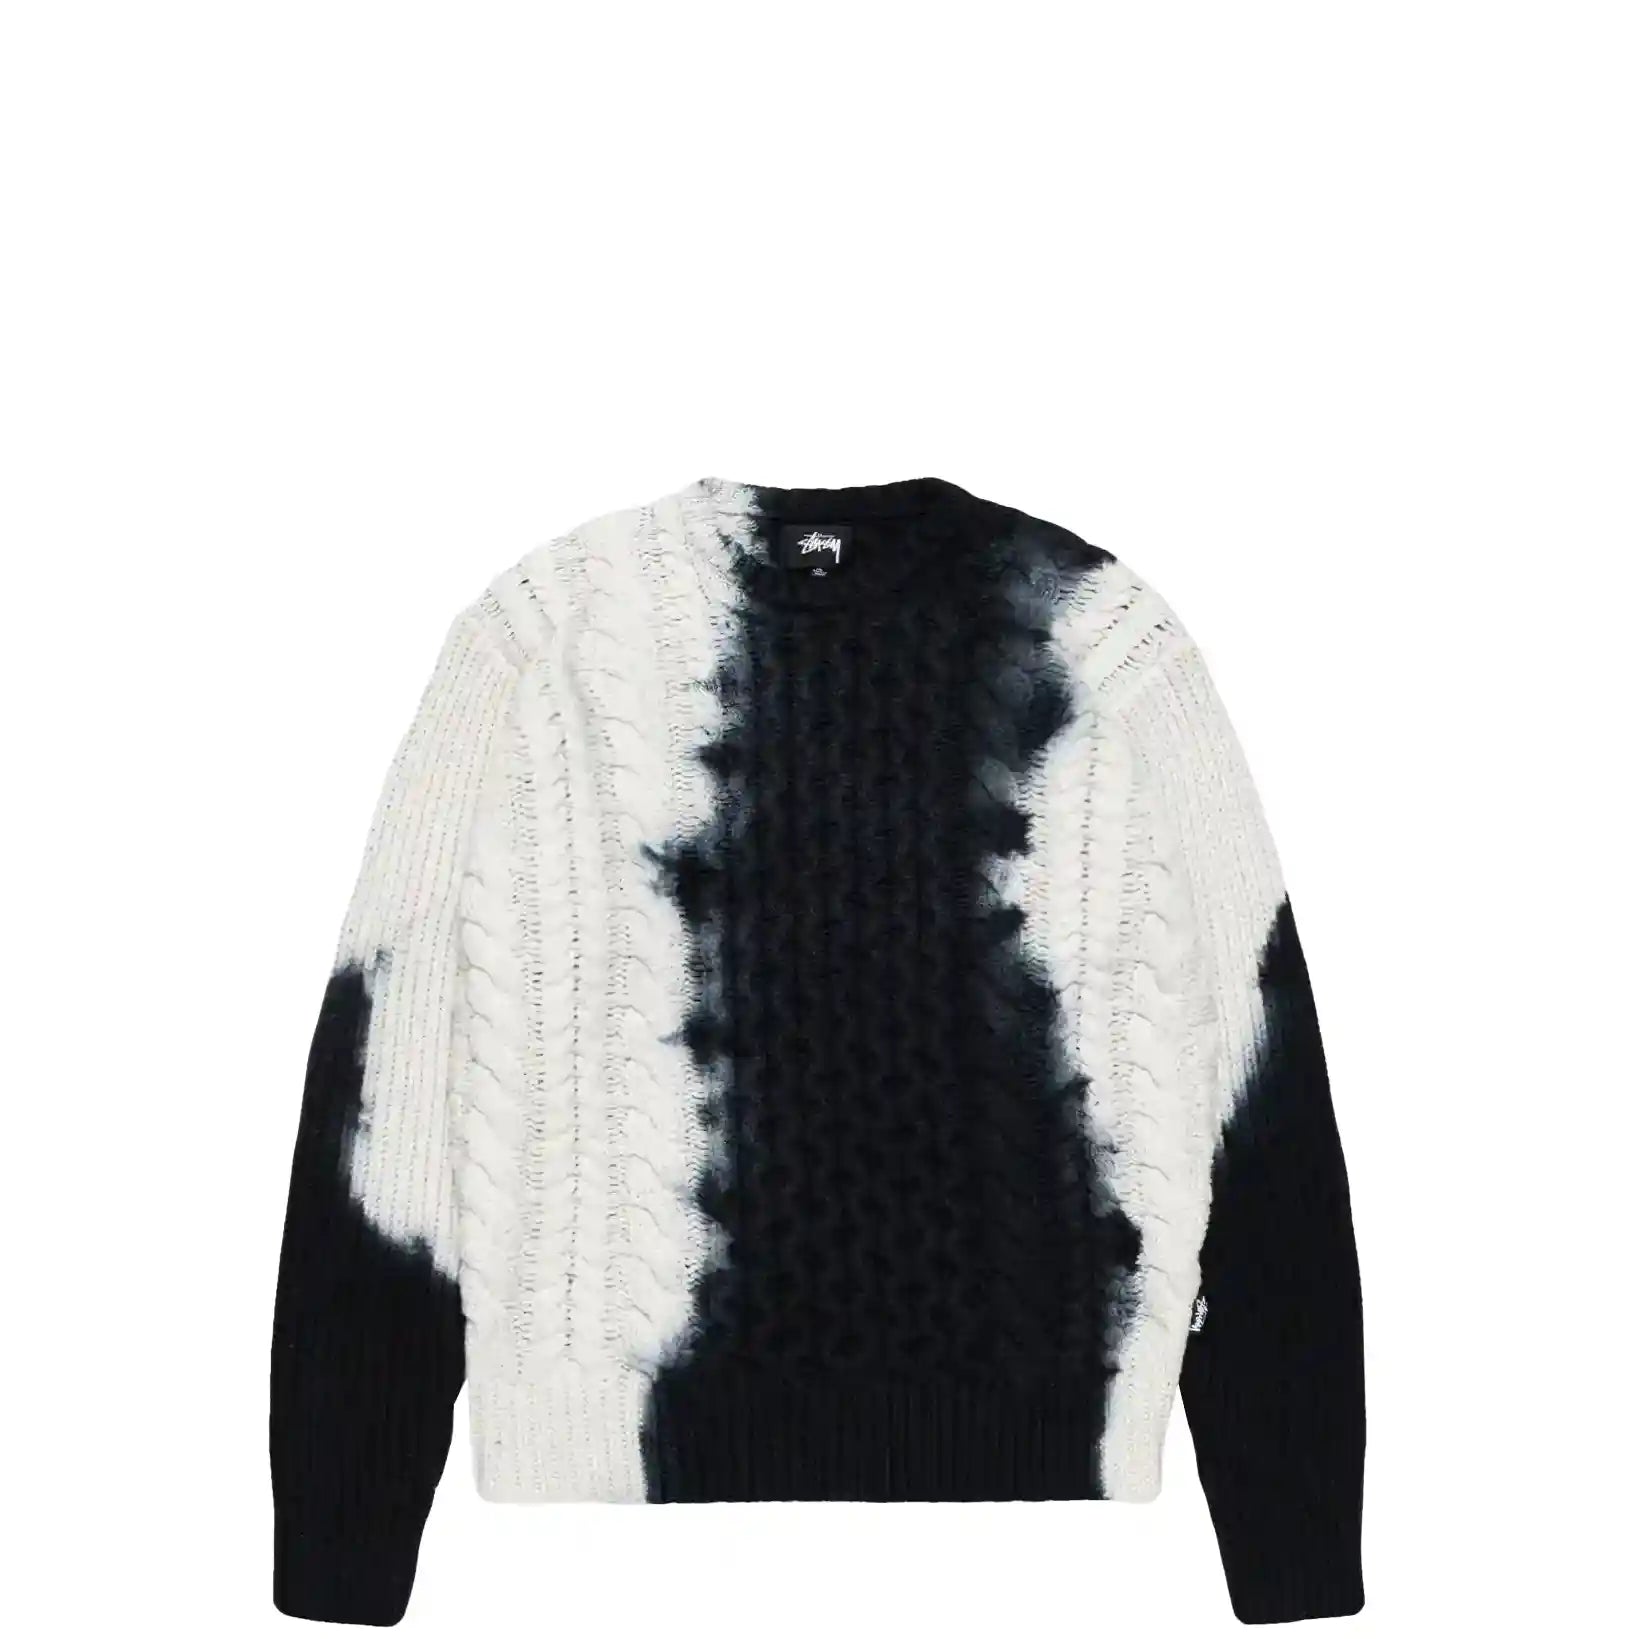 Stussy Tie Dye Fisherman Sweater, black, black, 117188-blac Black / M